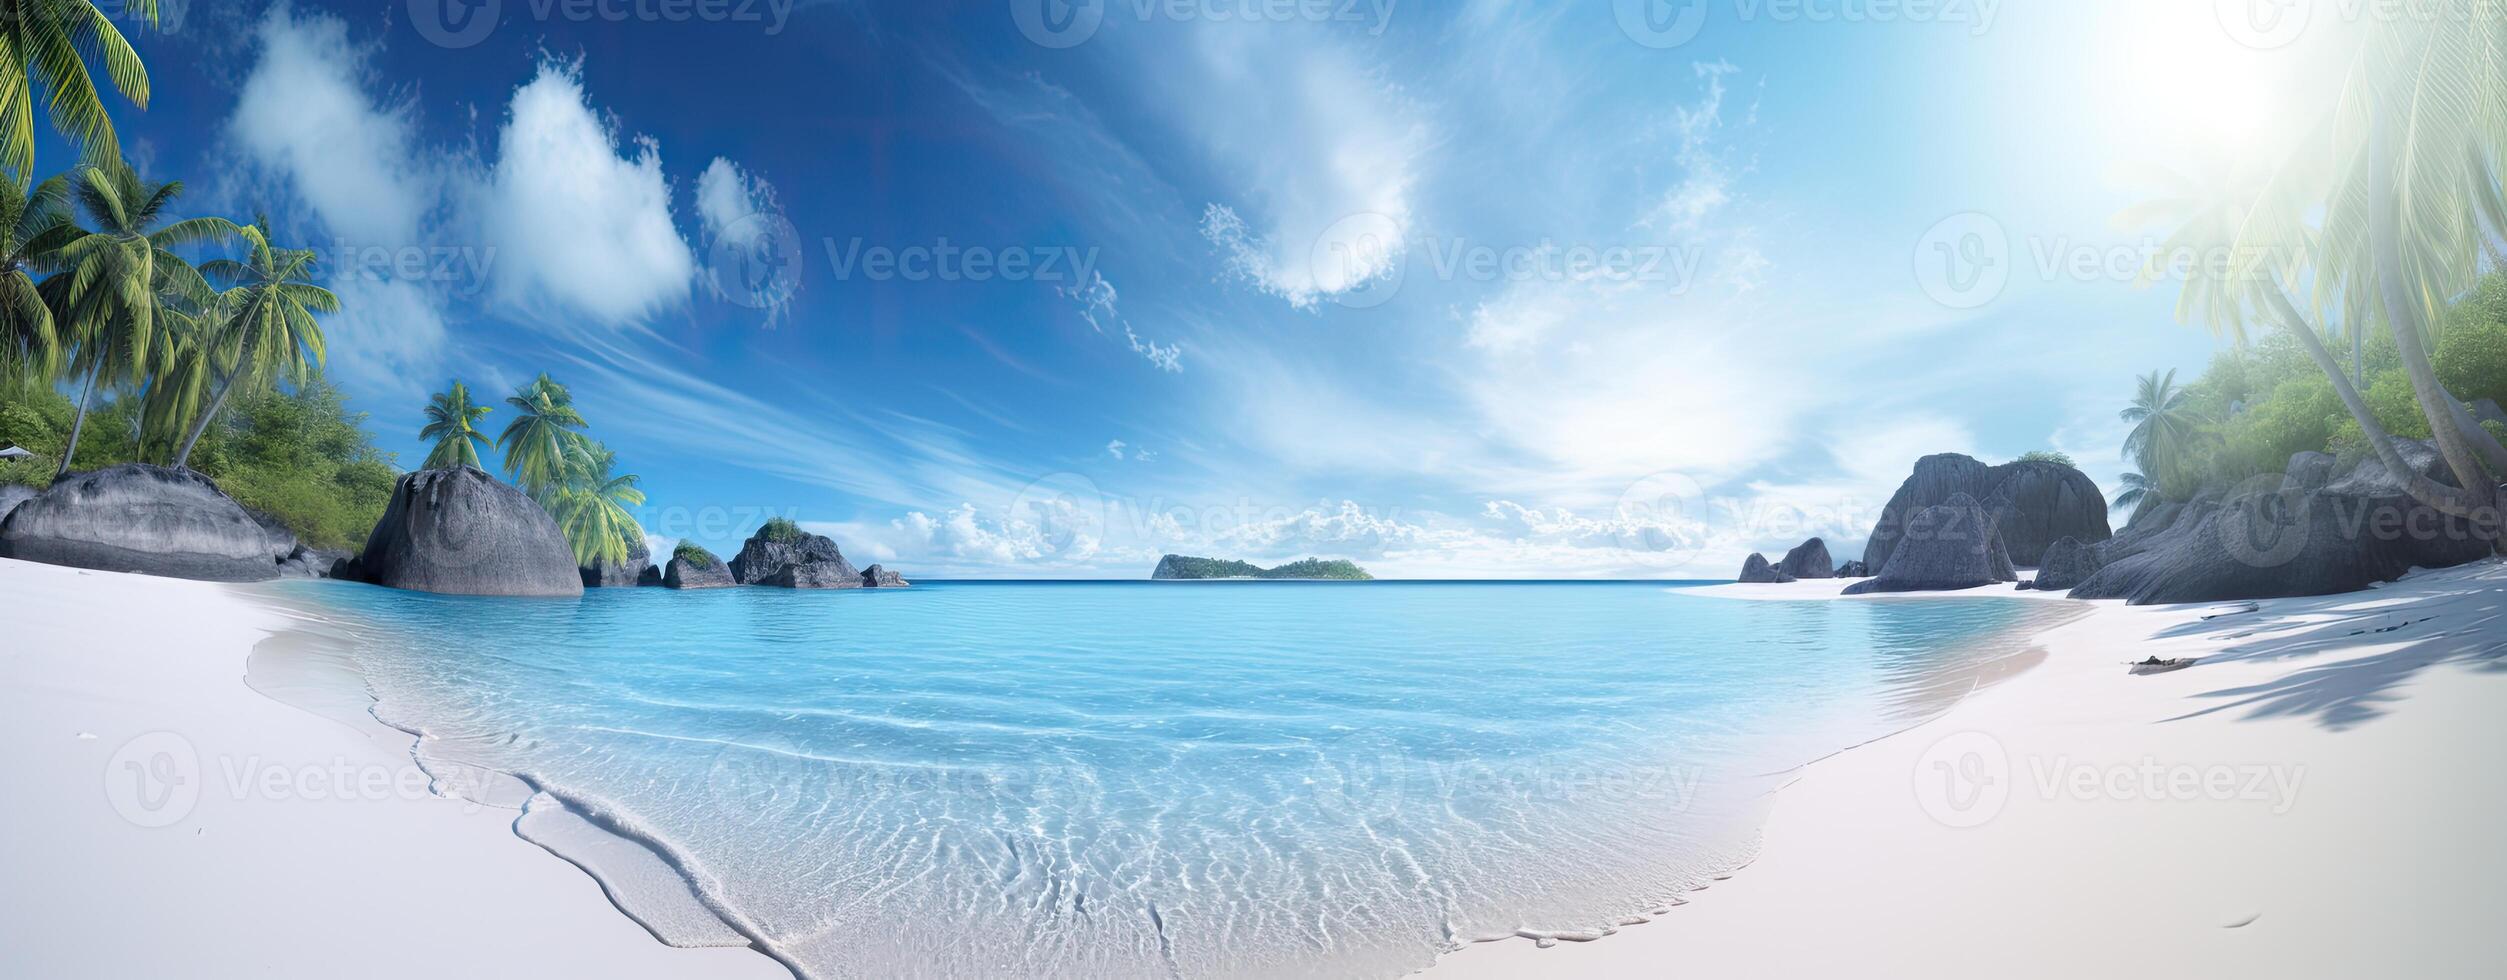 tropisk paradis strand med vit sand och kokospalm palmer resa turism bred panorama bakgrund begrepp. generativ ai. foto